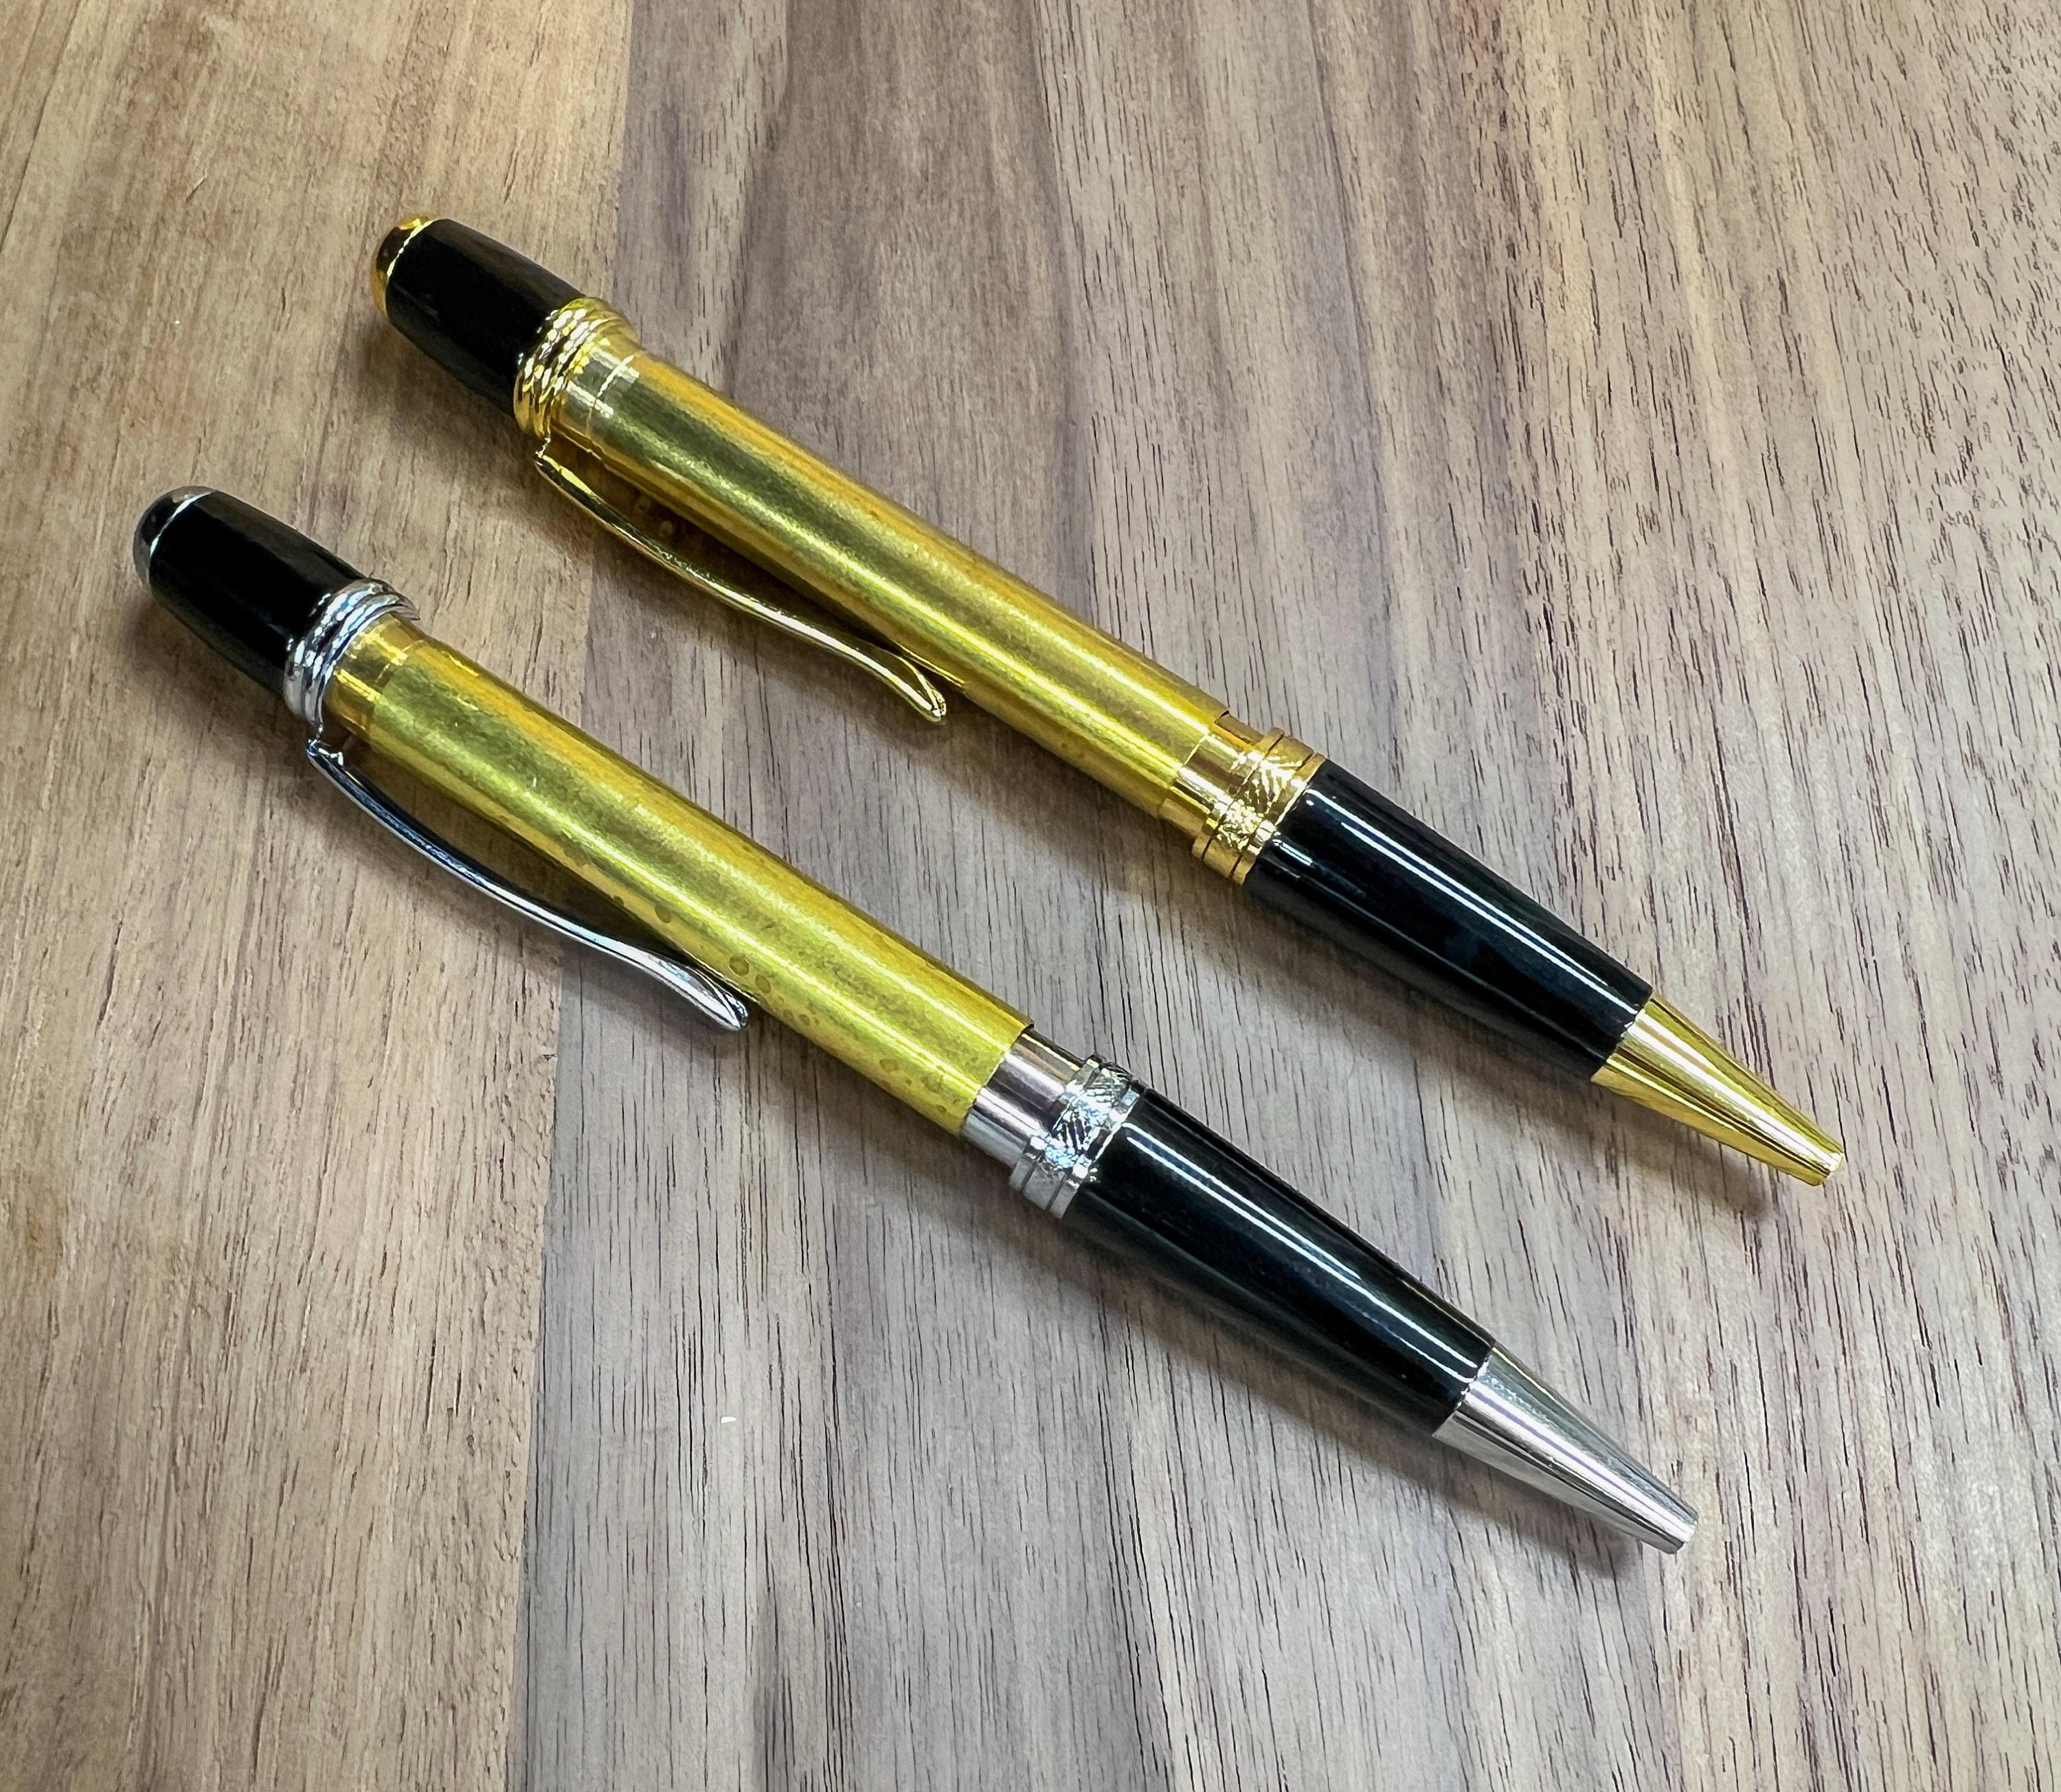 PKM-1 Chrome Gold Ballpoint Twist Pen Kits 